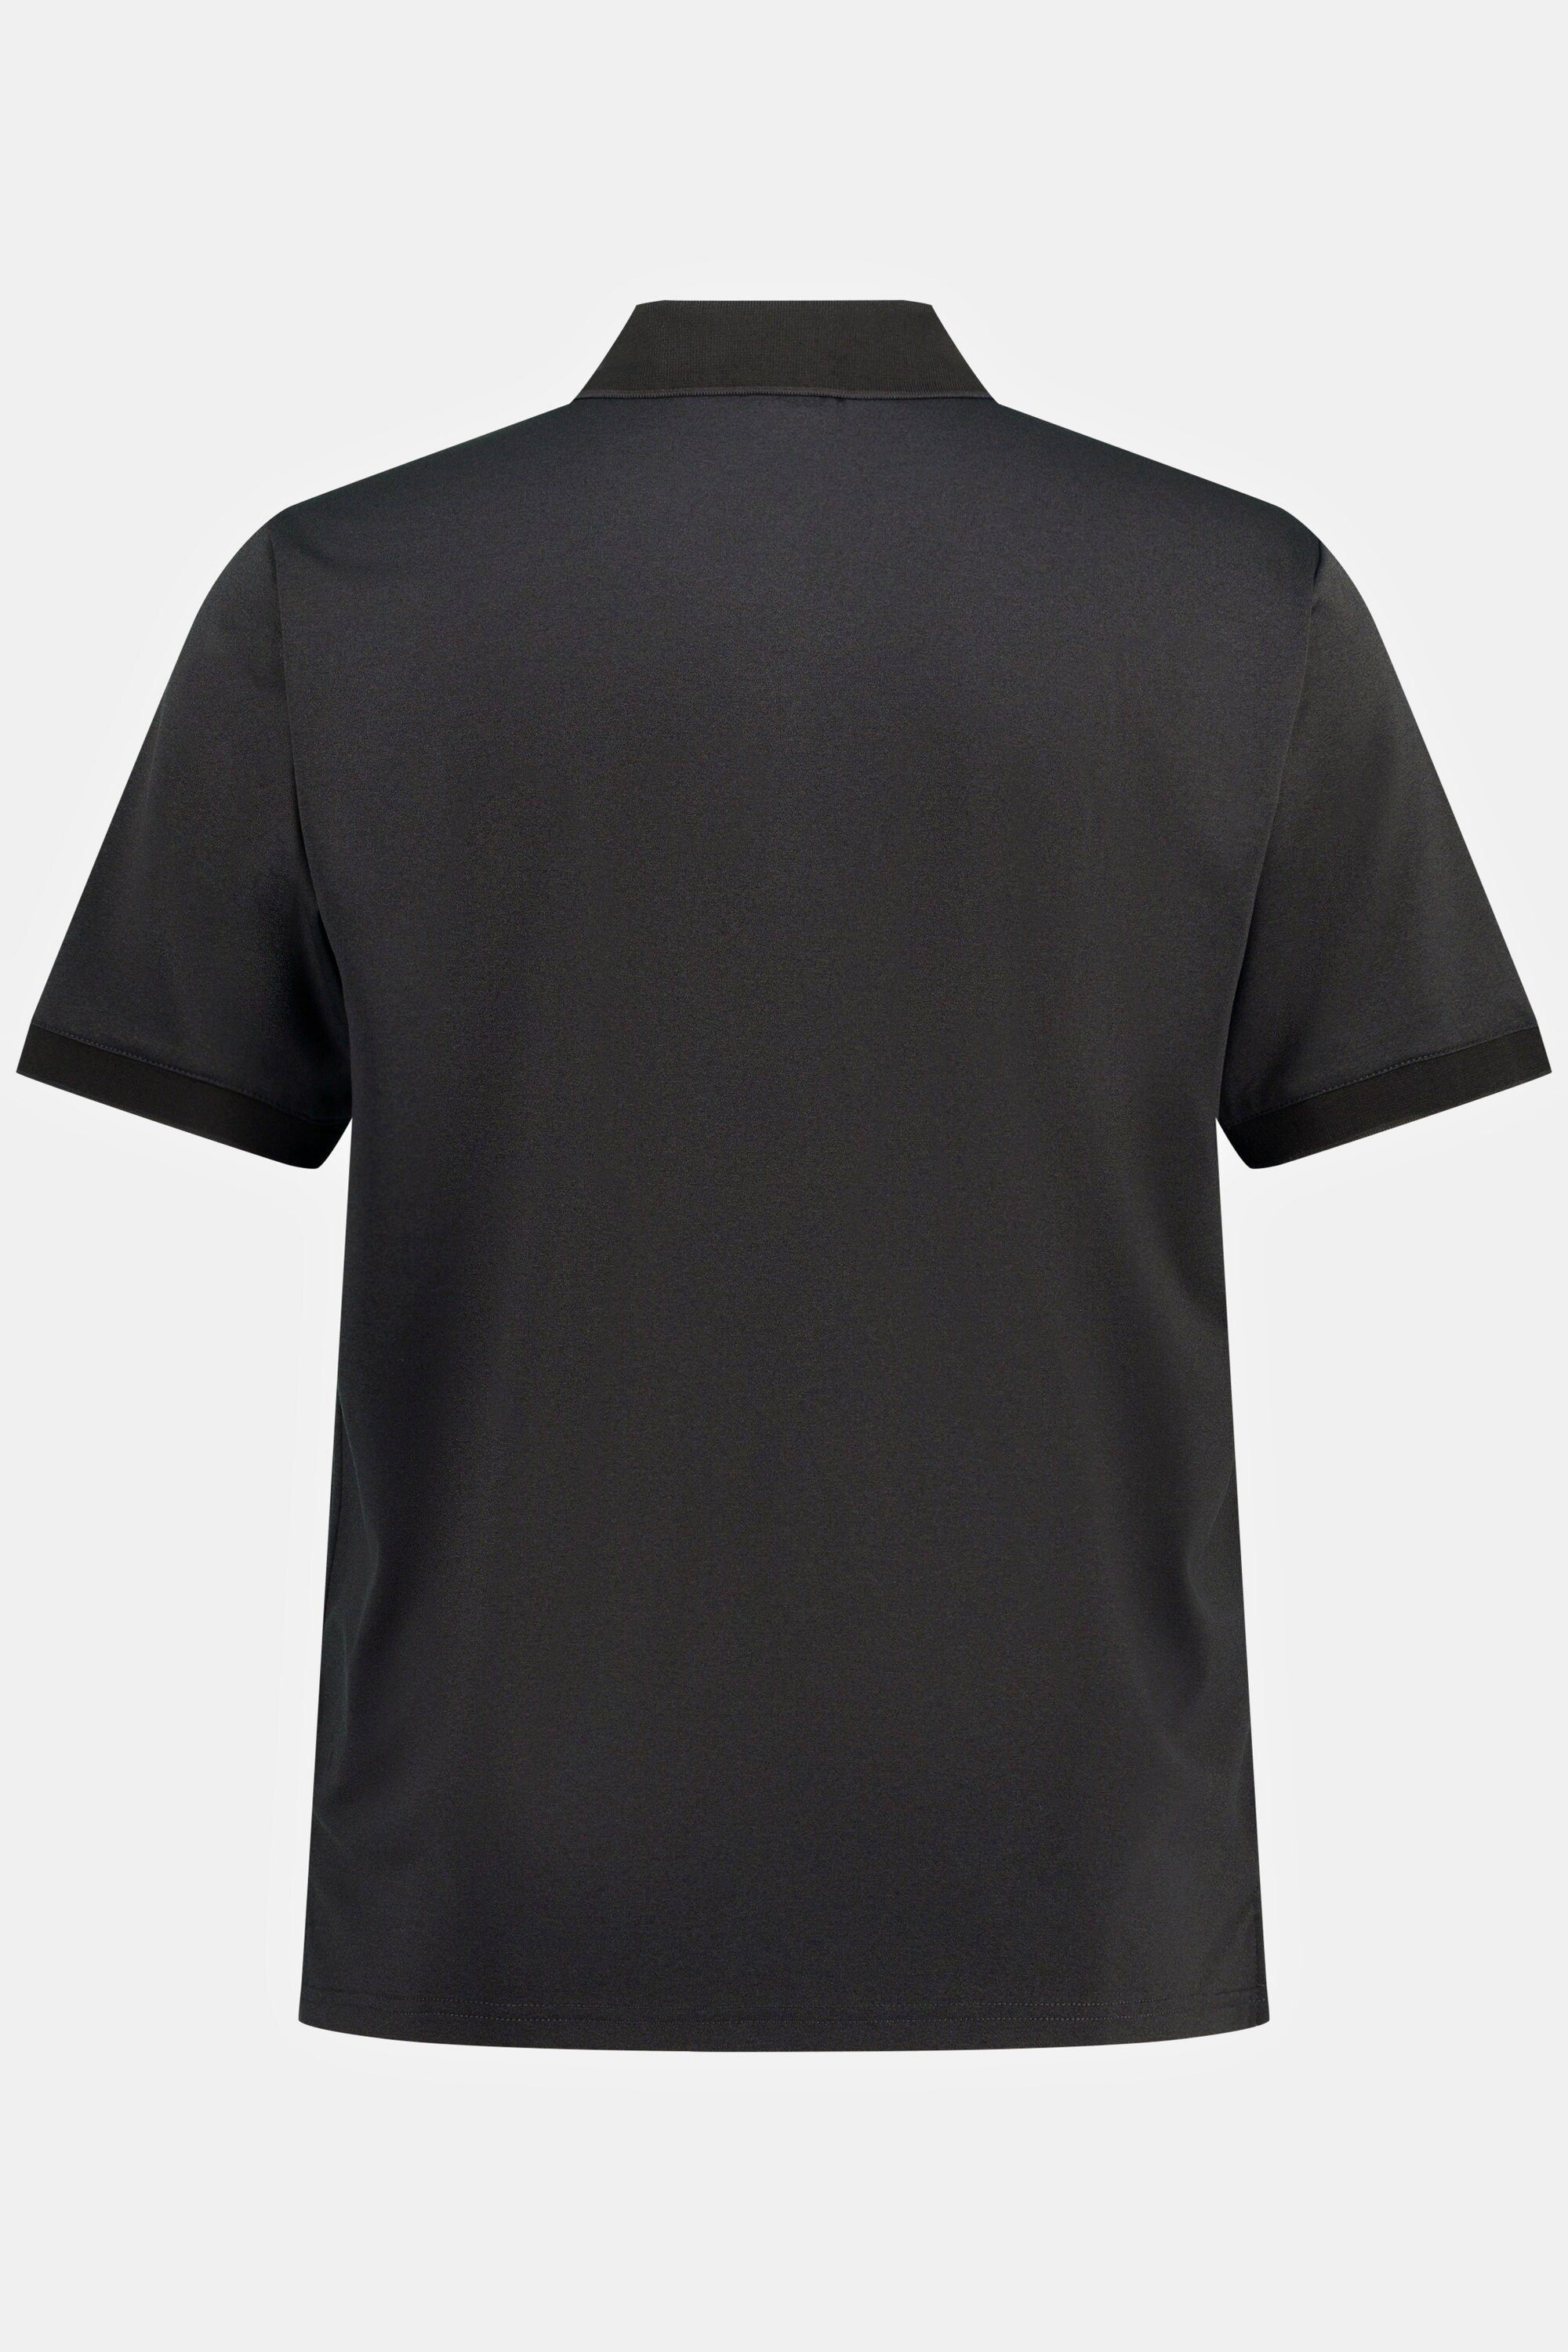 JP1880 Poloshirt Poloshirt QuickDry schwarz Golf Halbarm